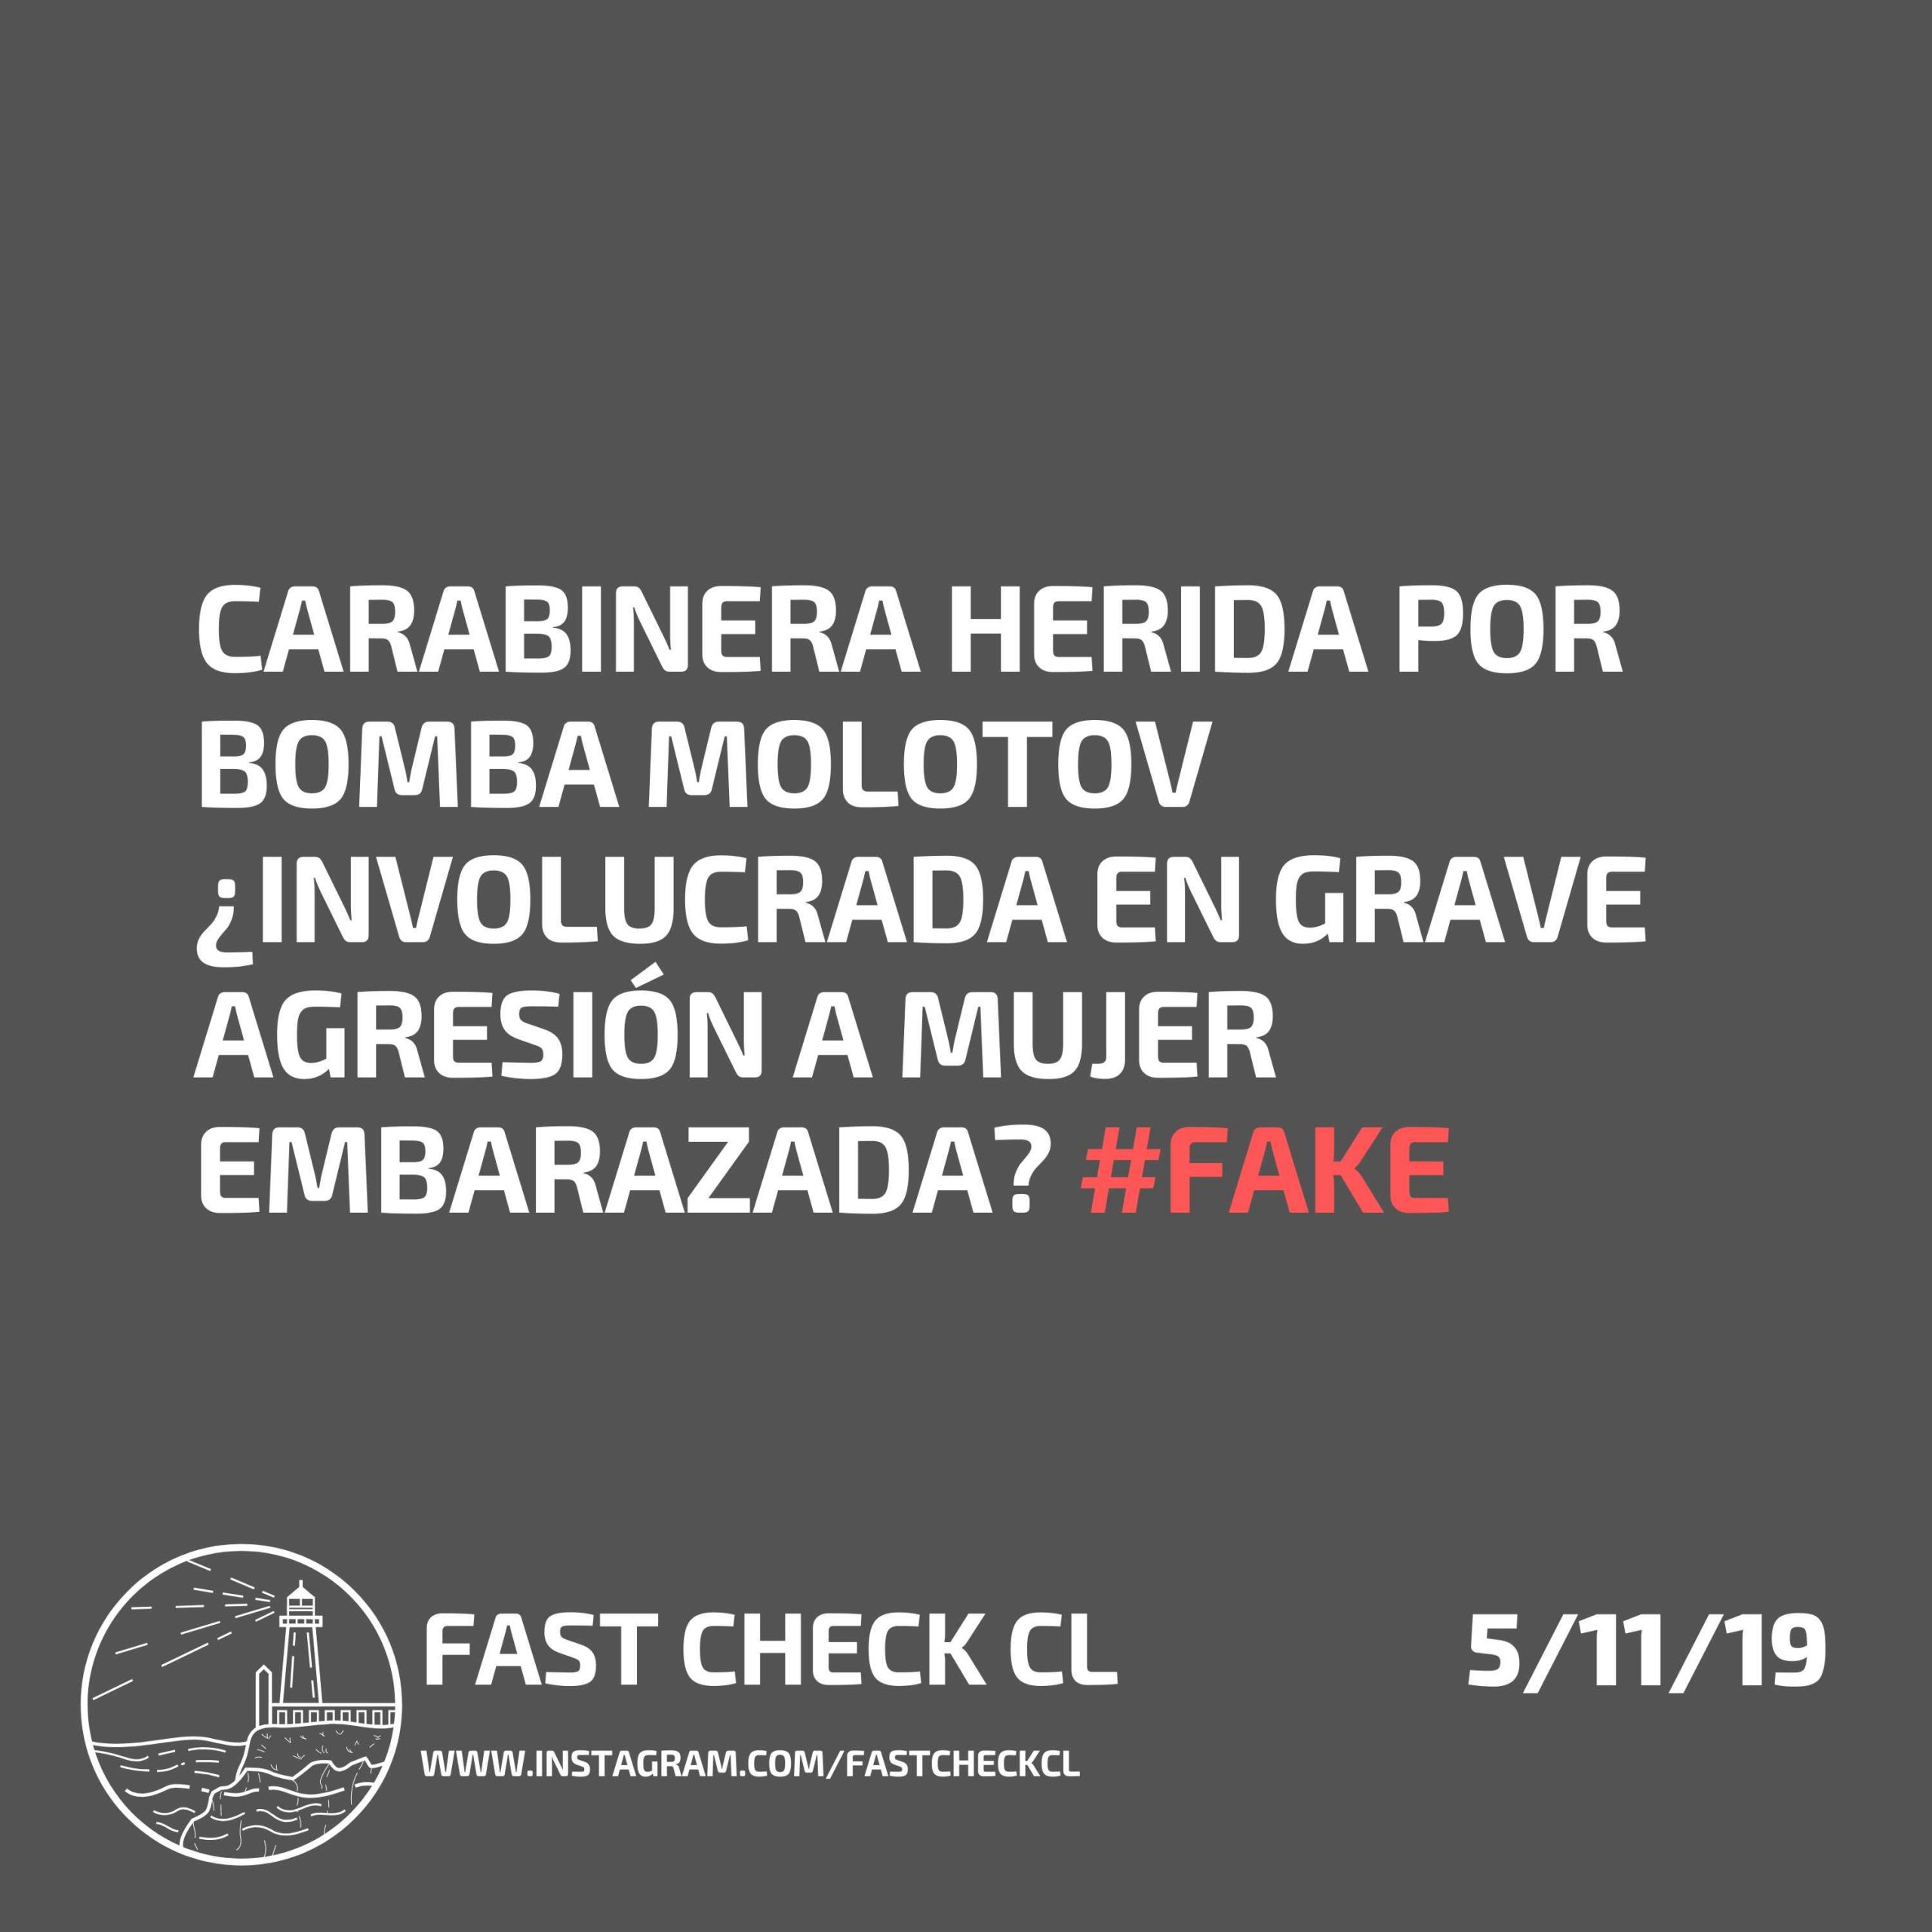 You are currently viewing Carabinera herida por bomba molotov está involucrada en grave agresión a mujer embarazada: #Fake